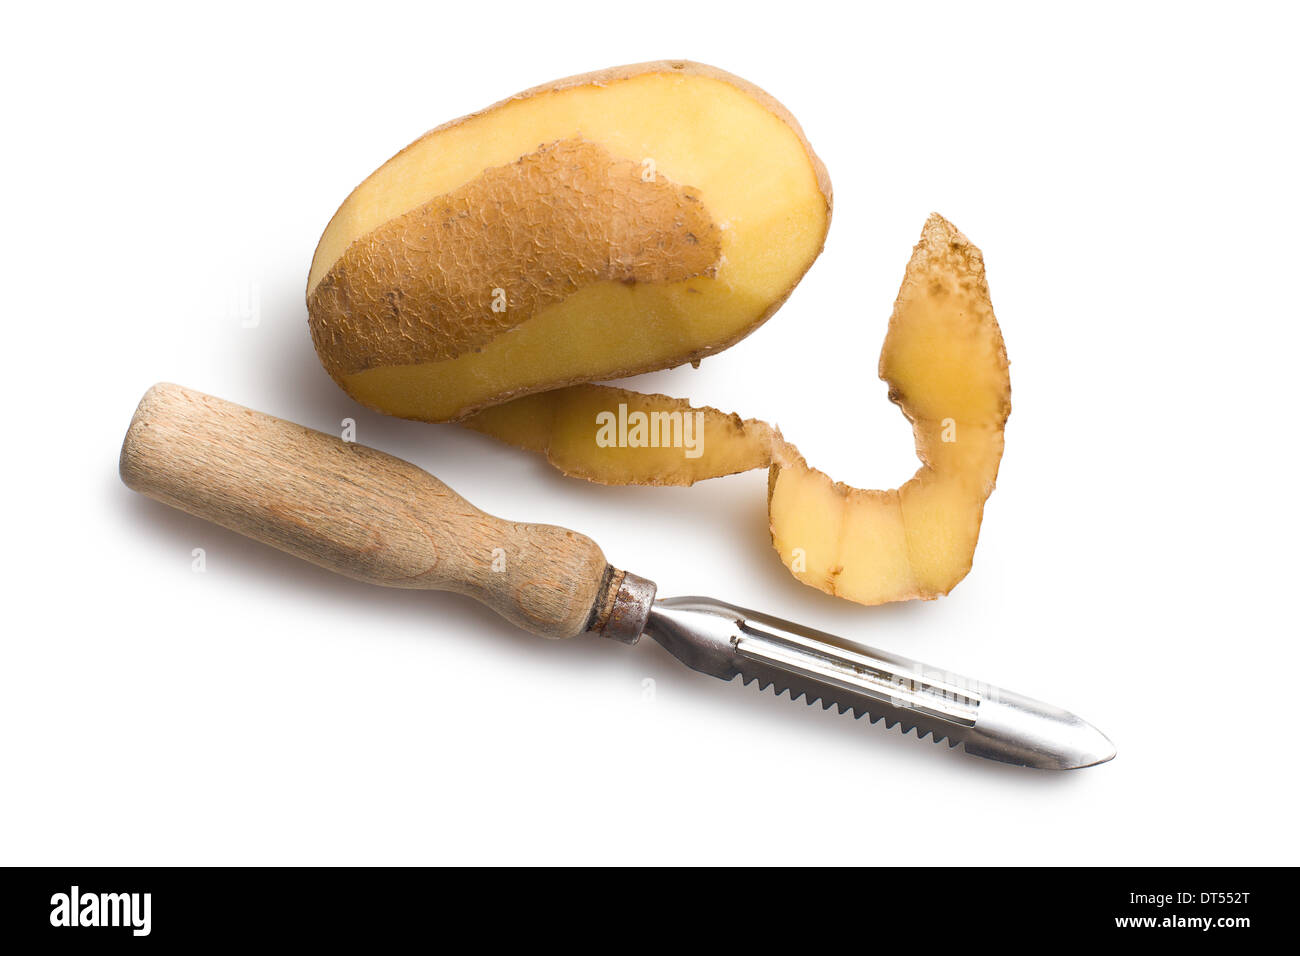 https://c8.alamy.com/comp/DT552T/peeled-potato-with-old-potato-peeler-on-white-background-DT552T.jpg